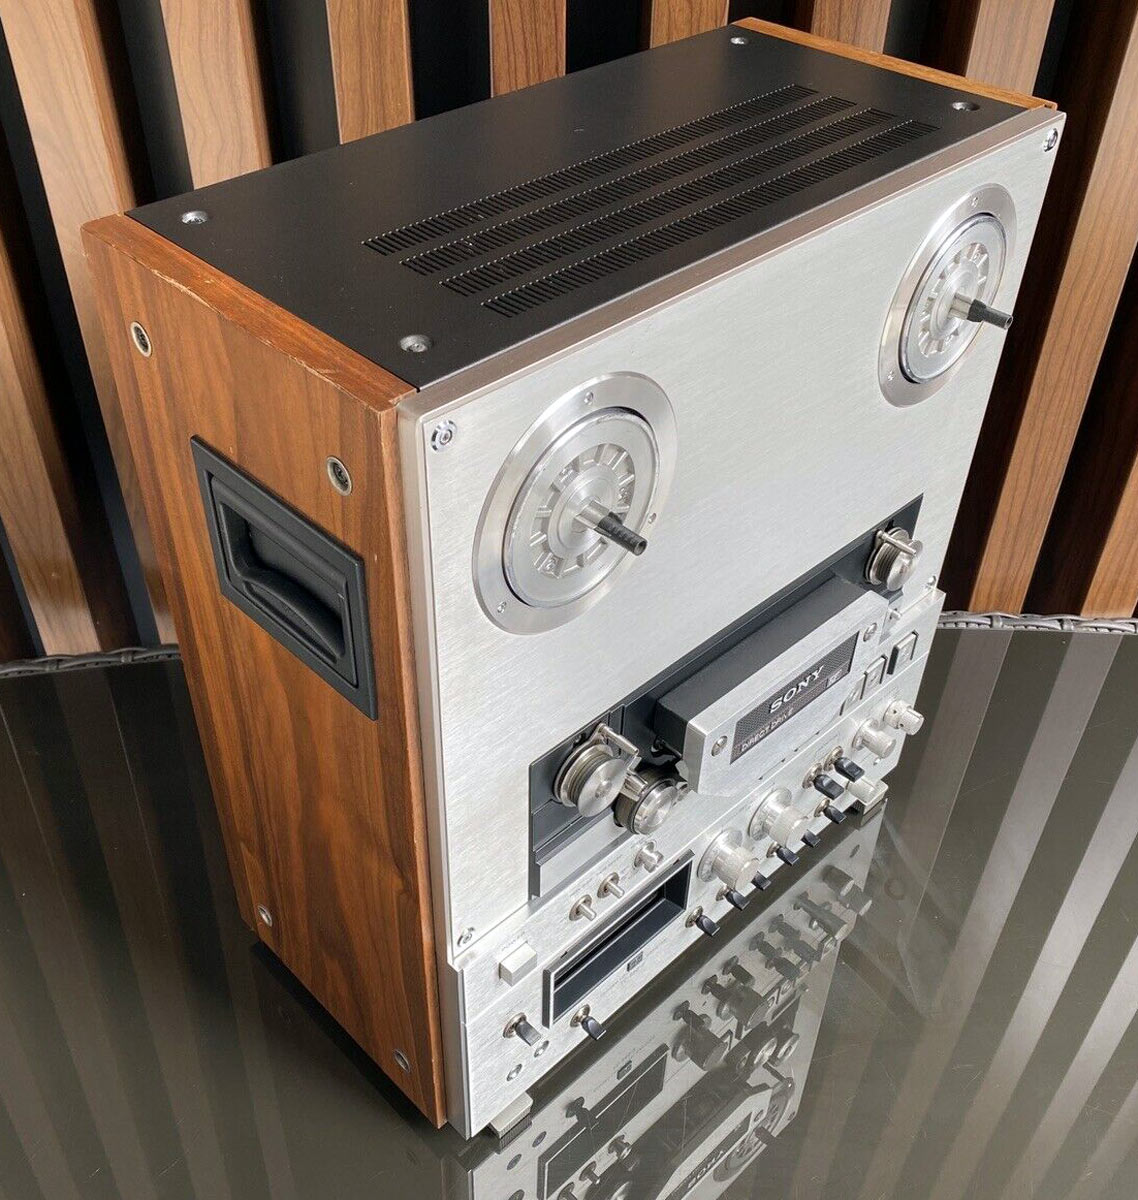 Network reel tape recorder '' Sony 880-2 ''.